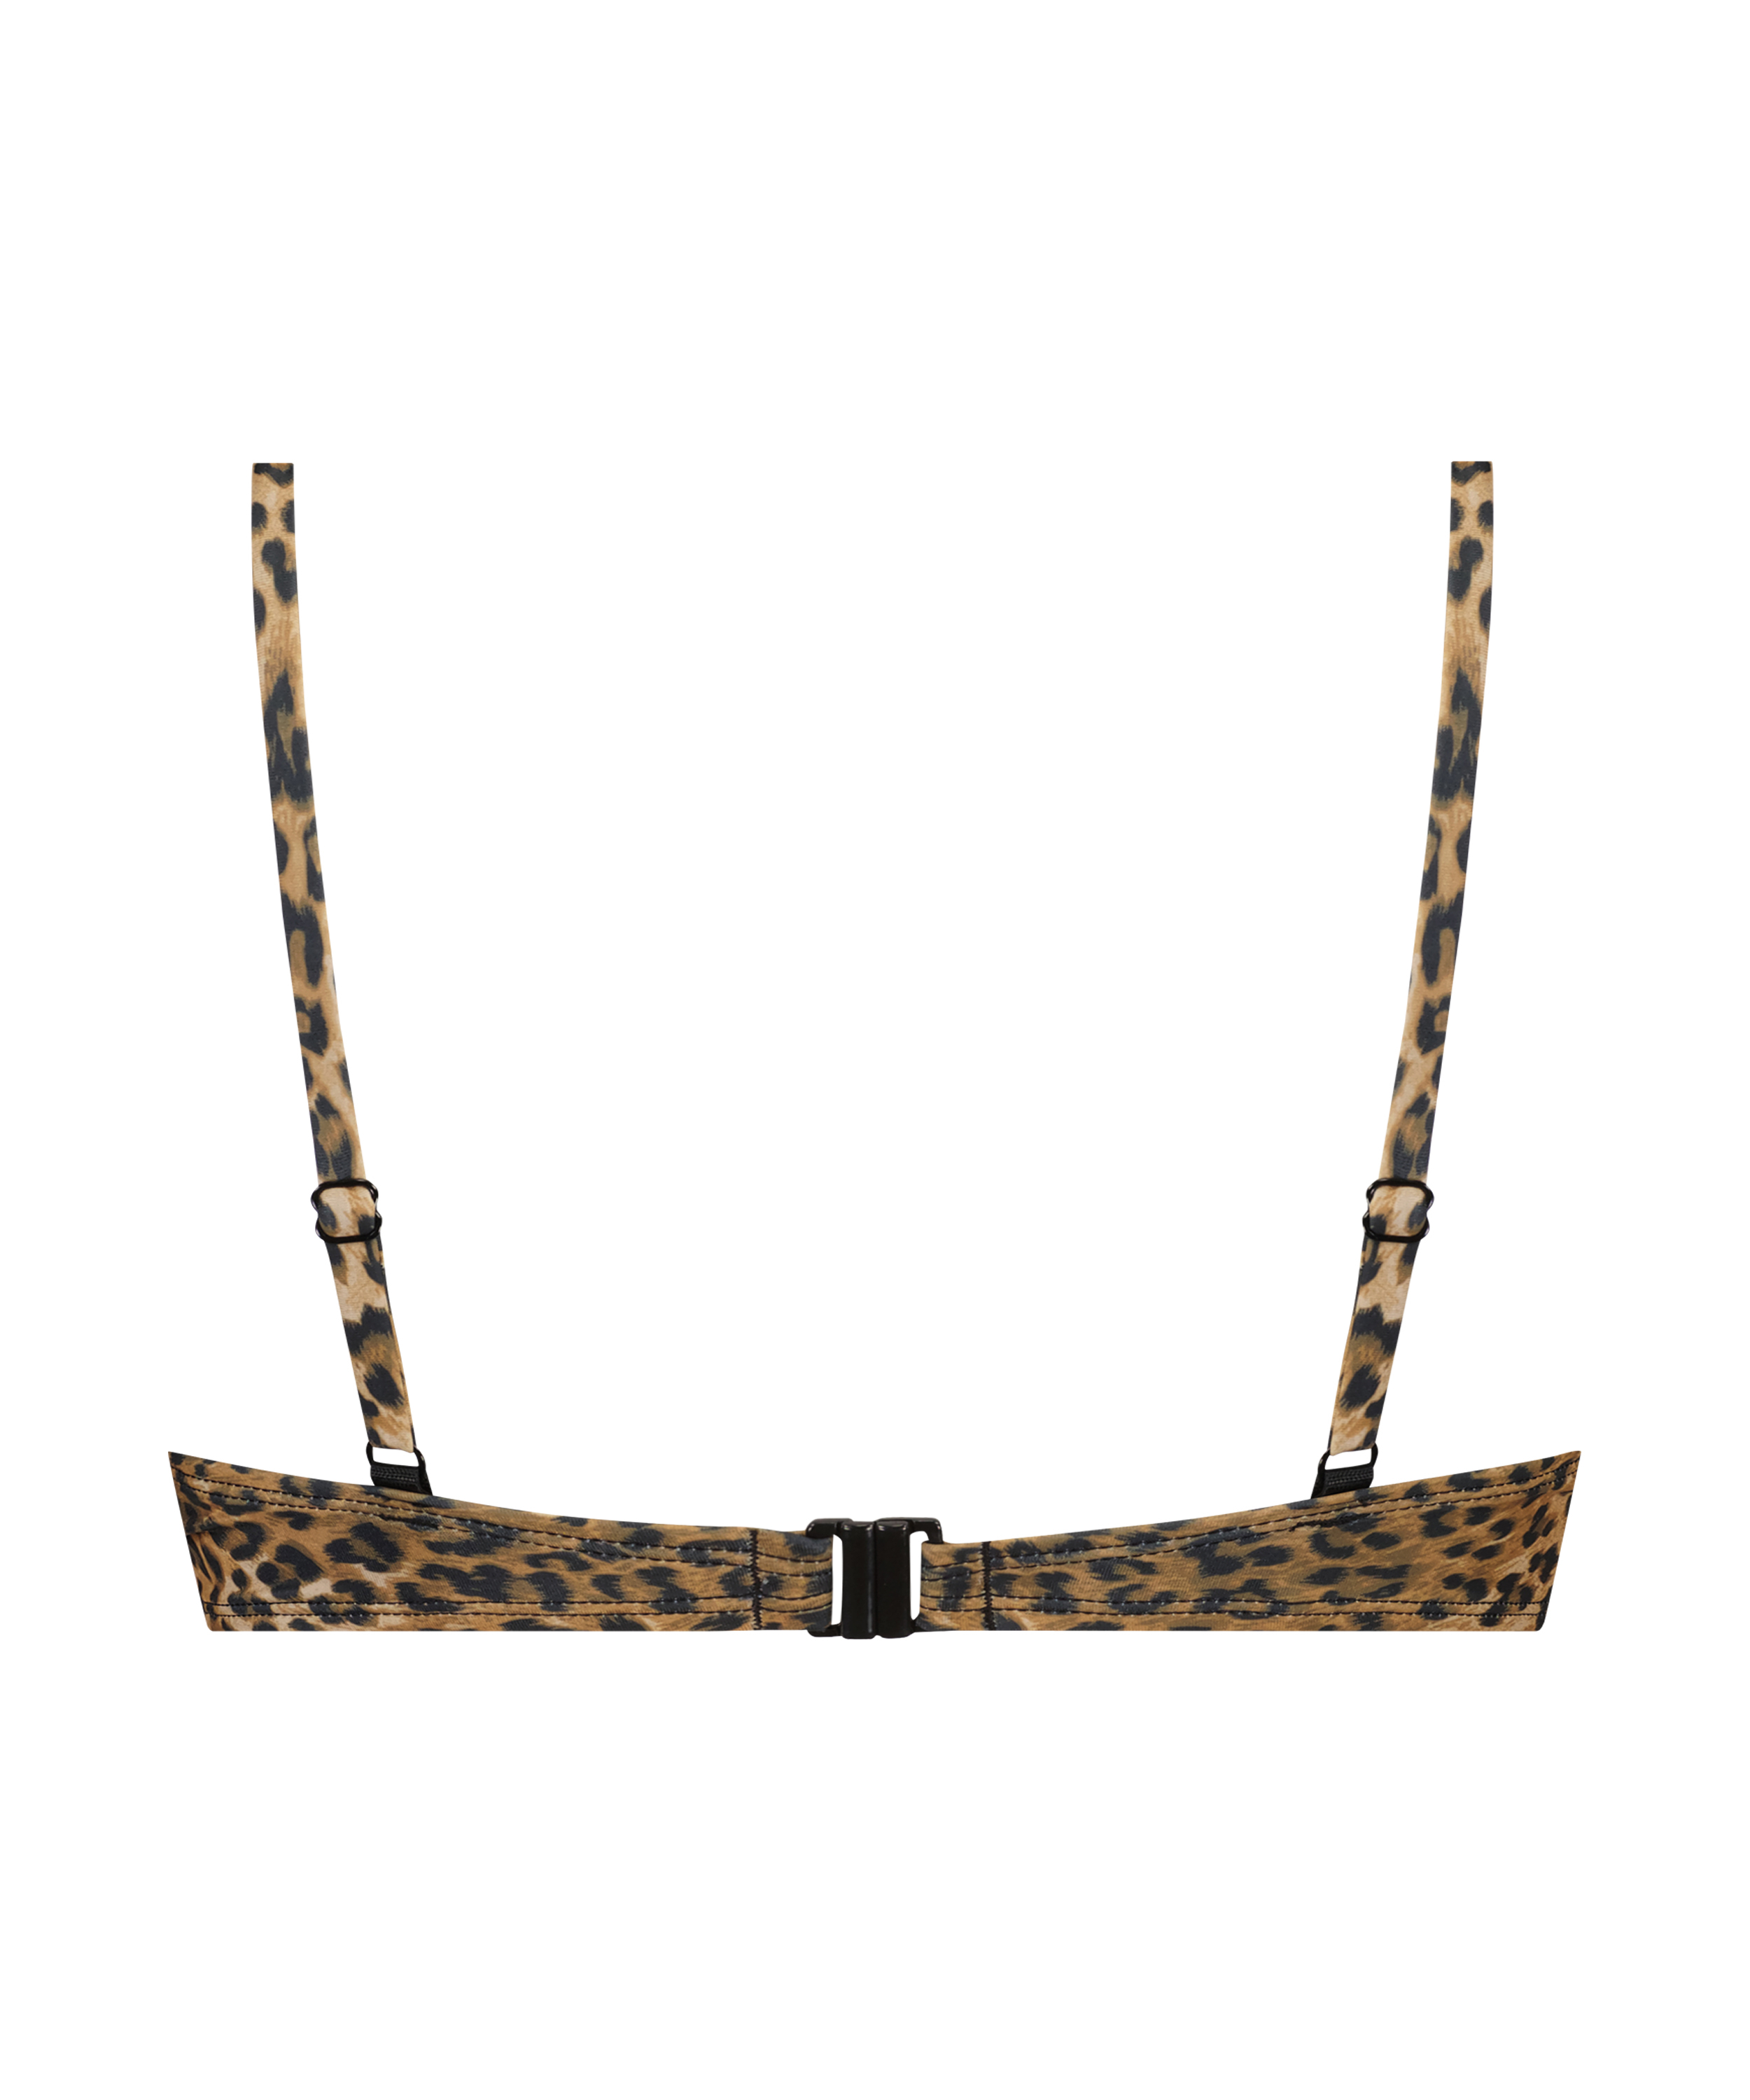 Leopard padded underwired bikini top, Brown, main